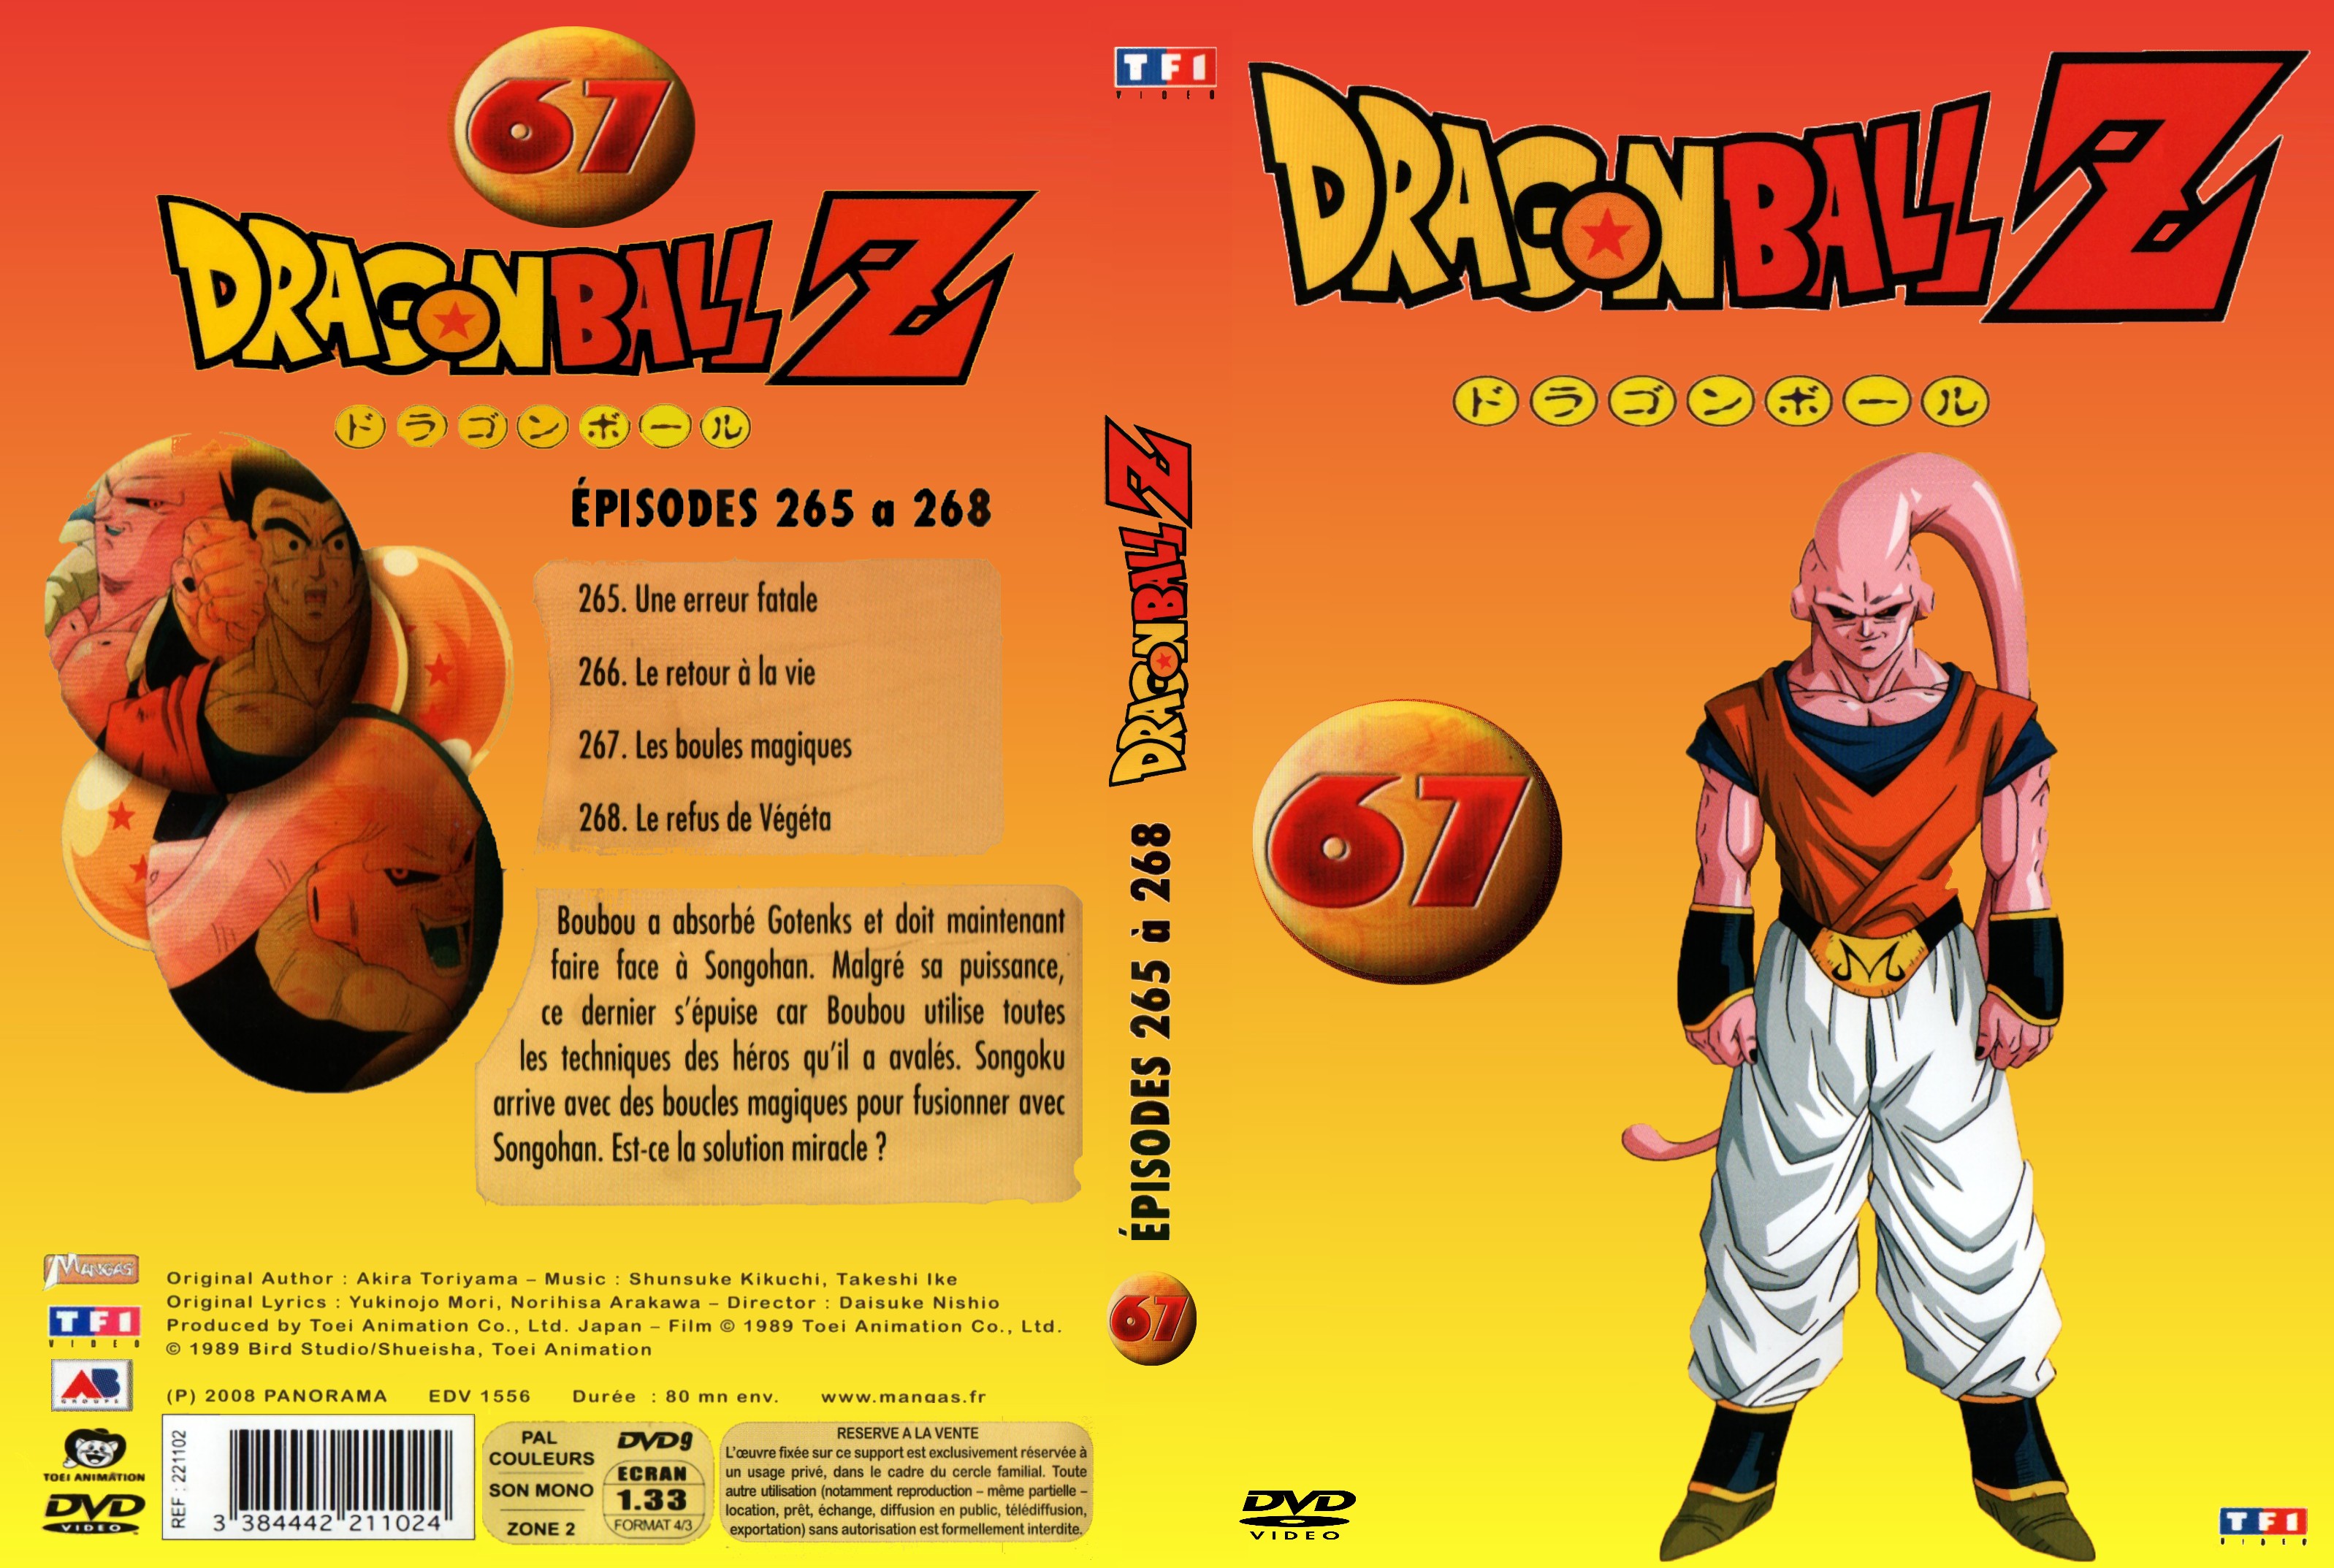 Jaquette DVD Dragon Ball Z vol 67